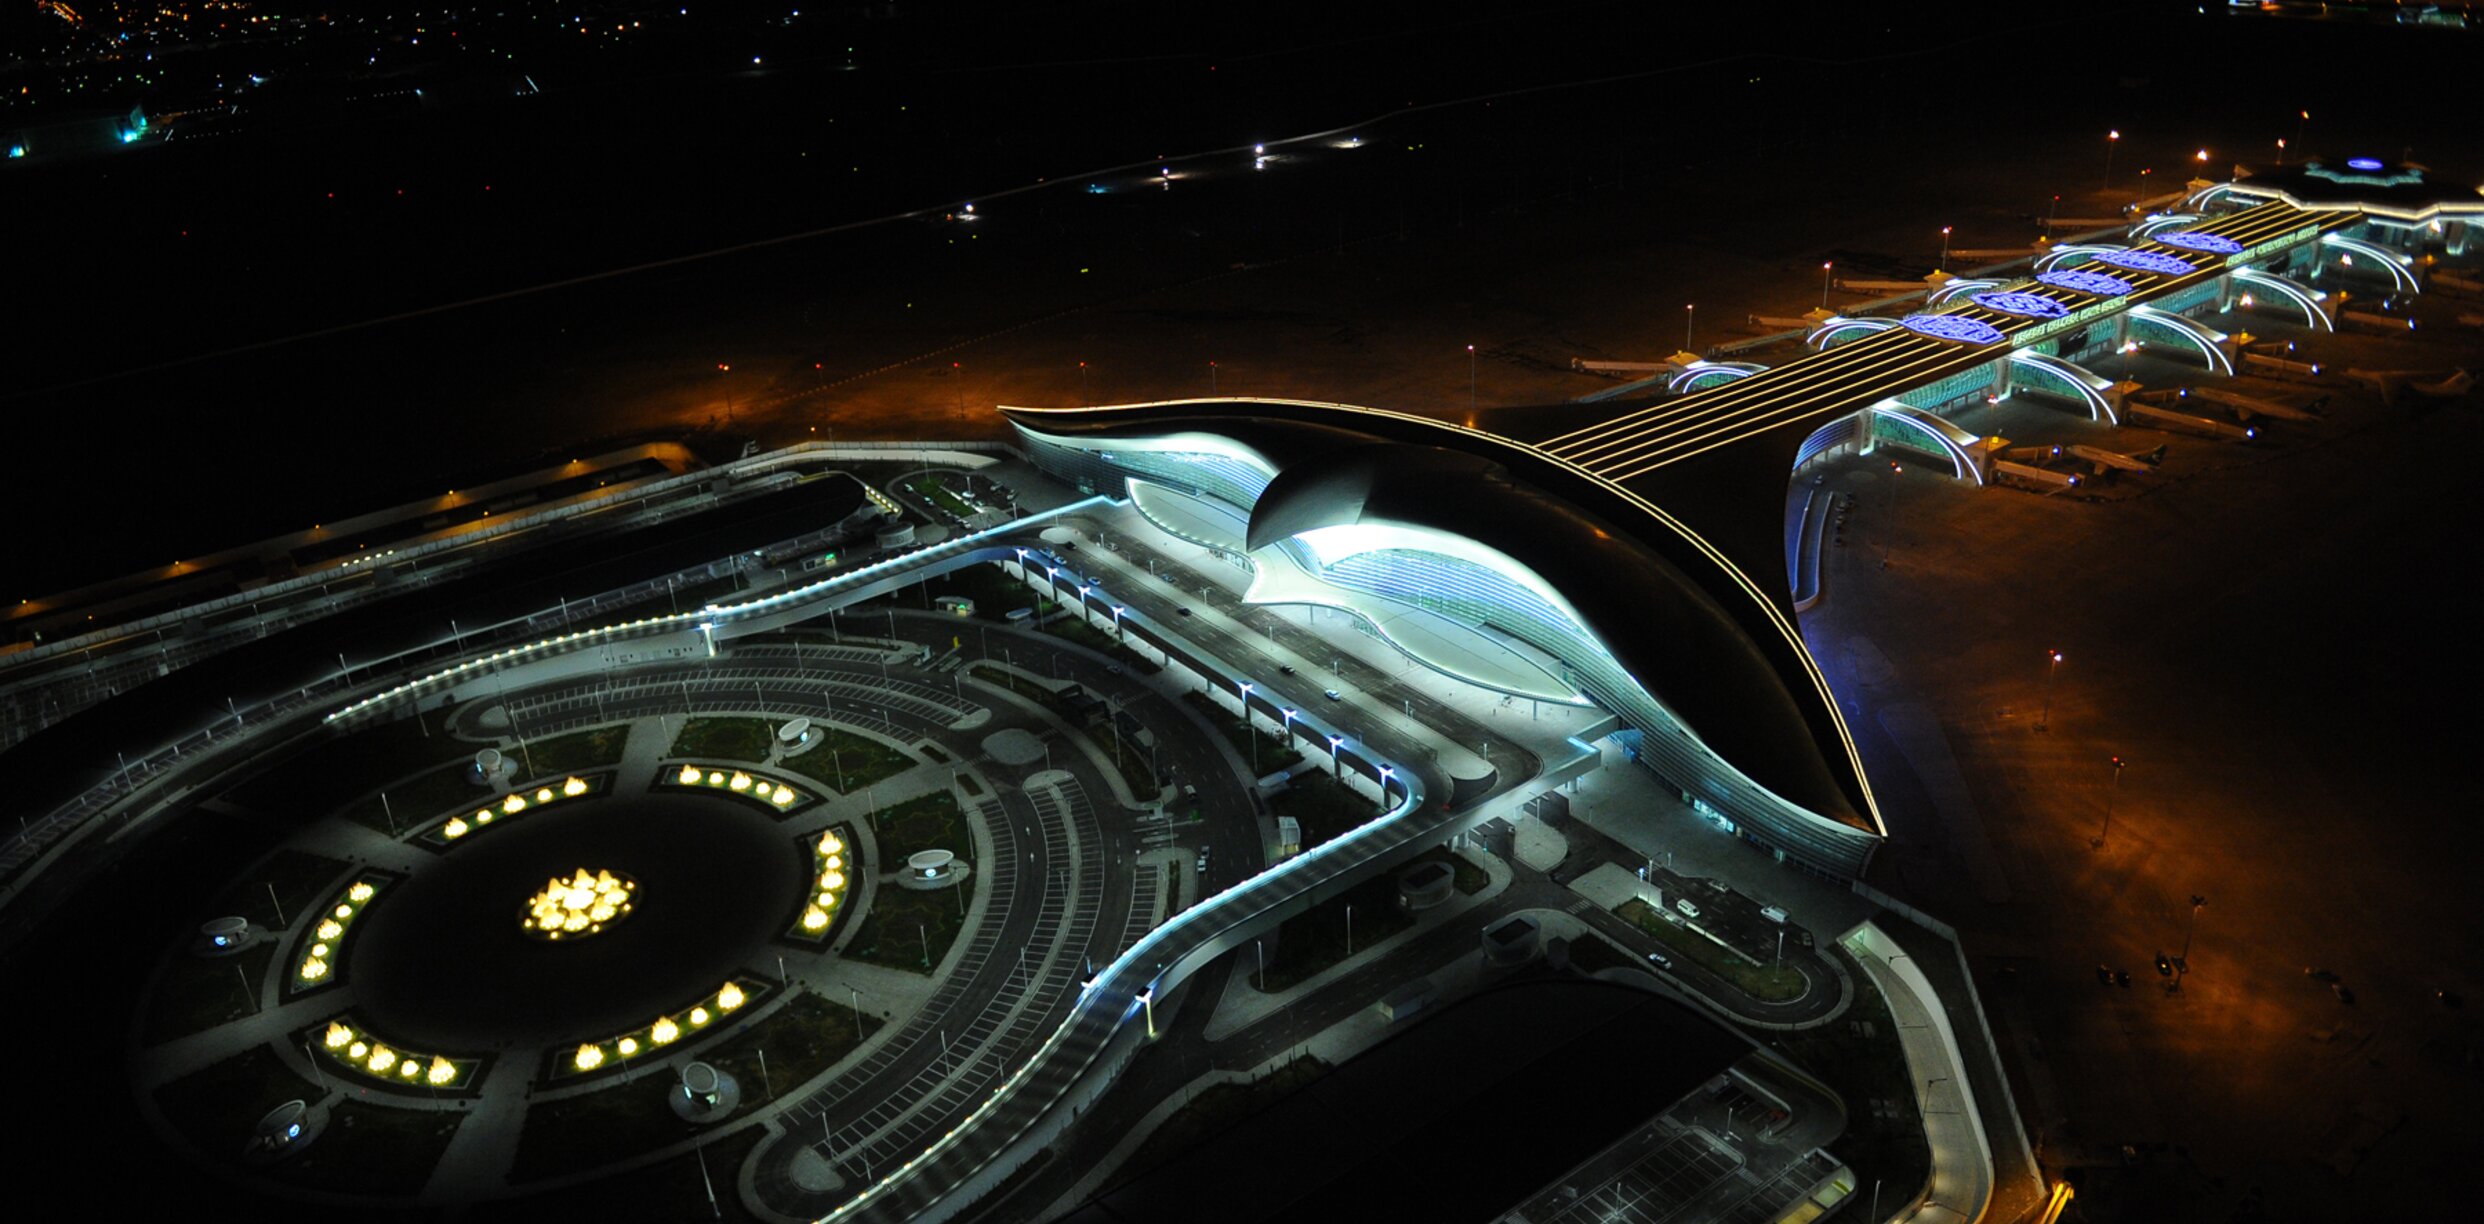 Project image "Ashgabat Airport"; Aluminum facade technology